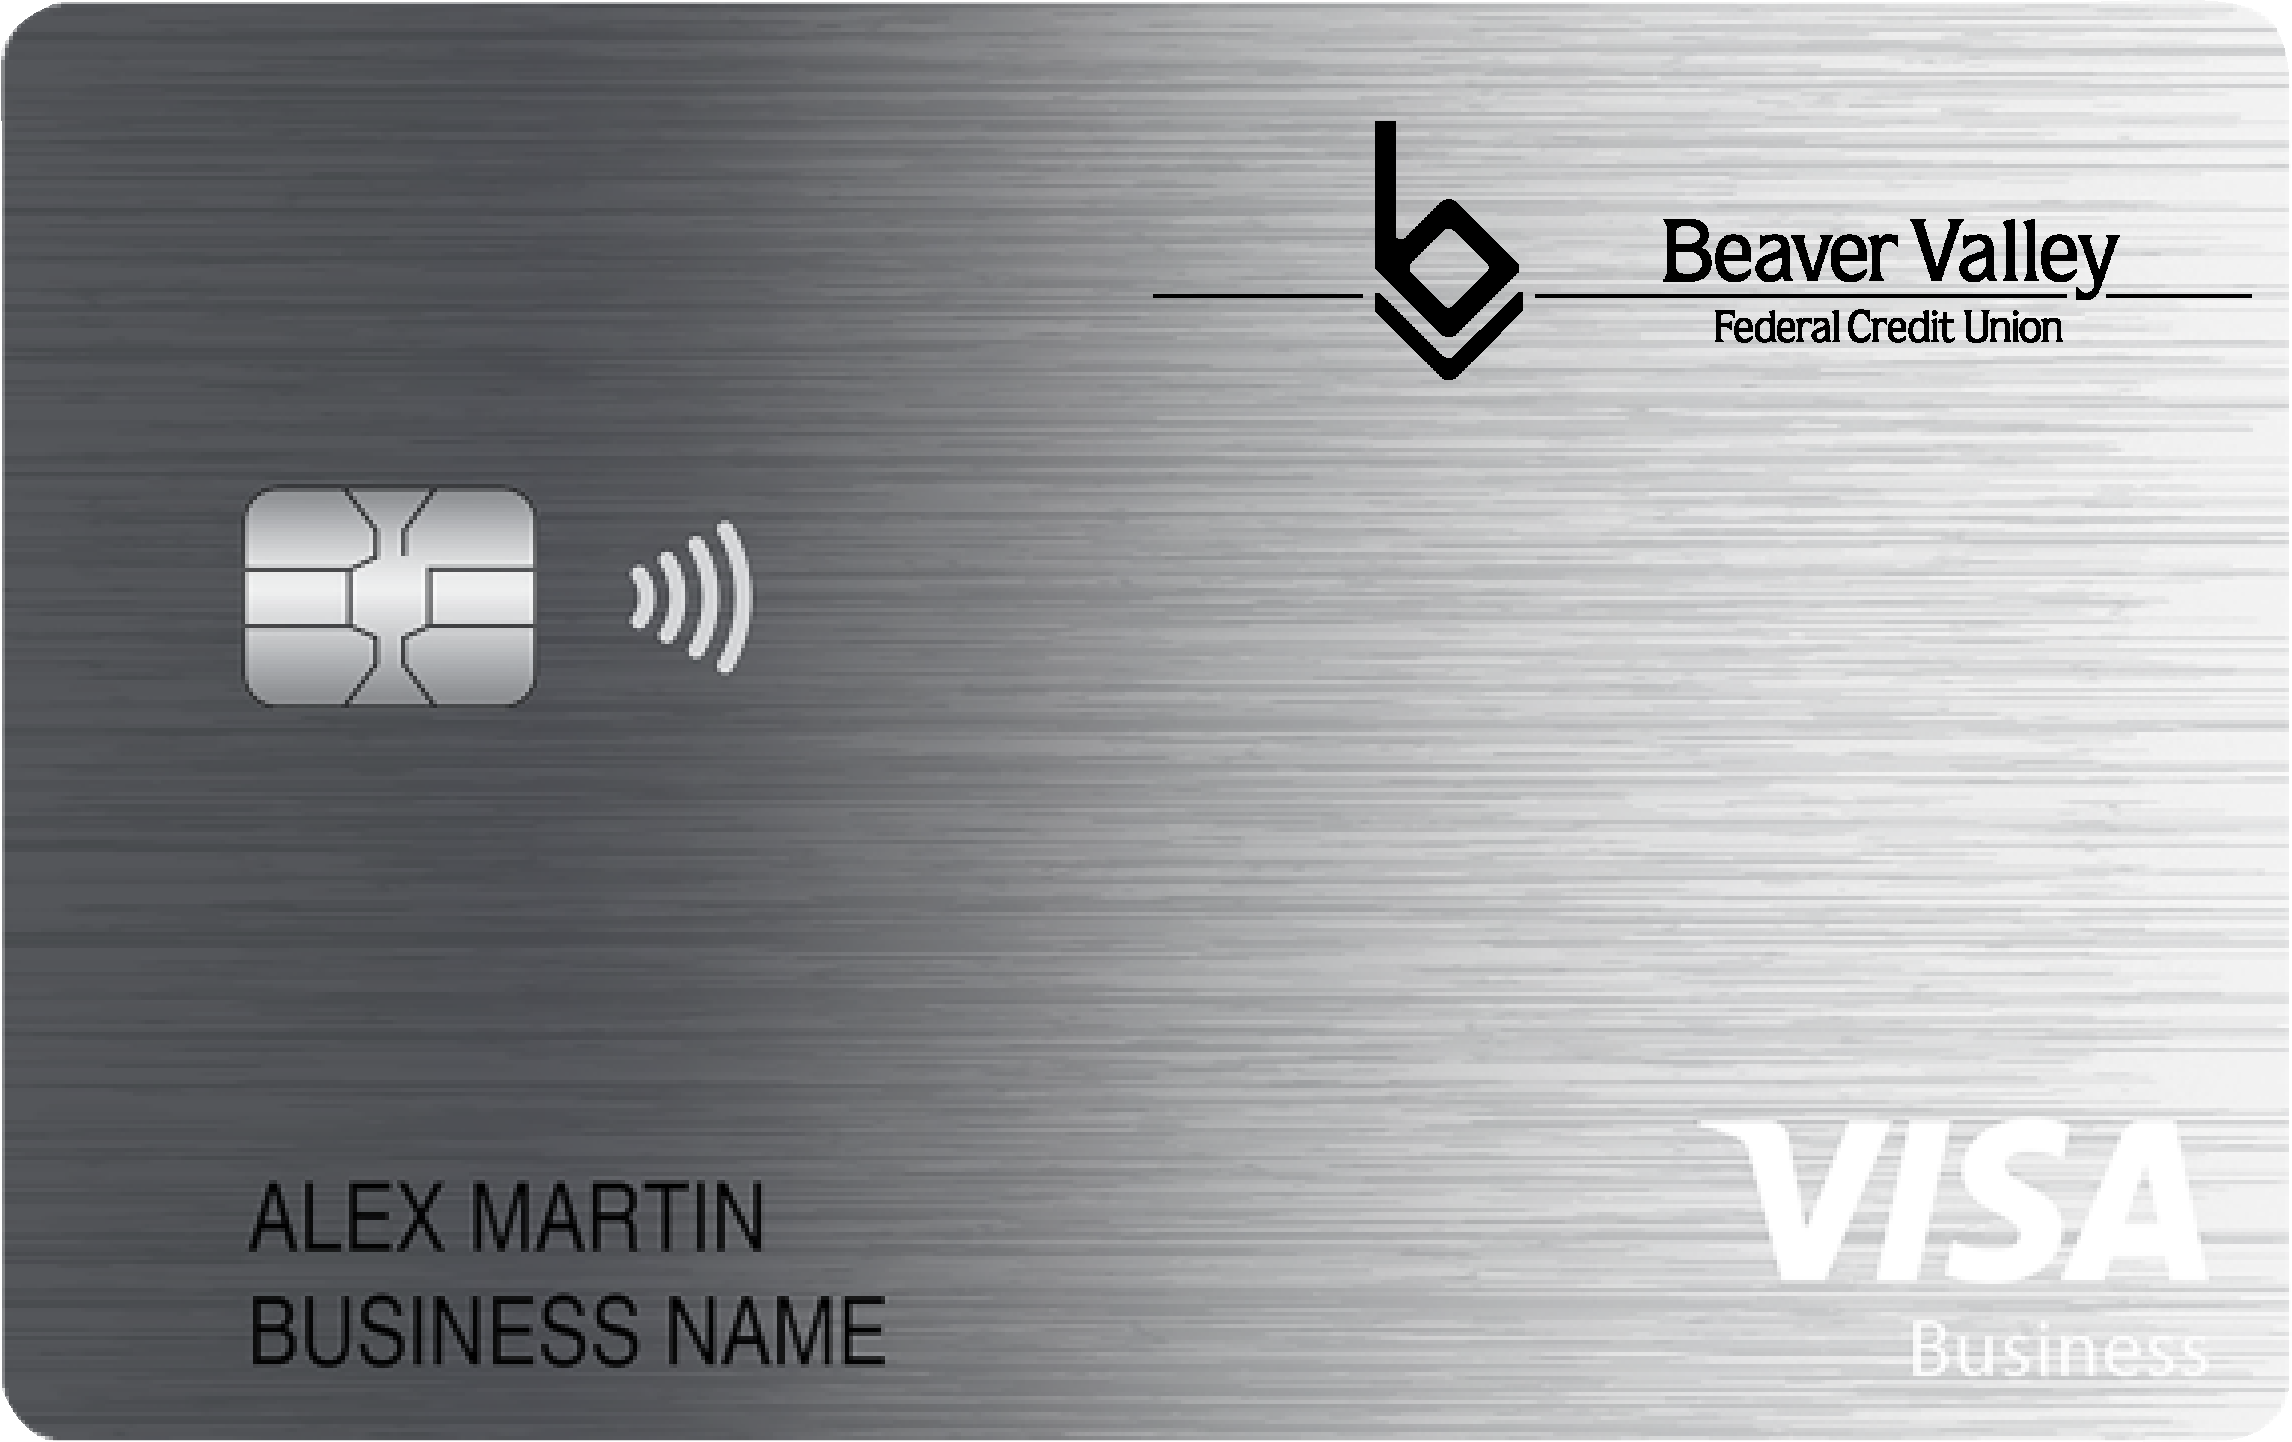 Beaver Valley FCU Business Cash Preferred Card